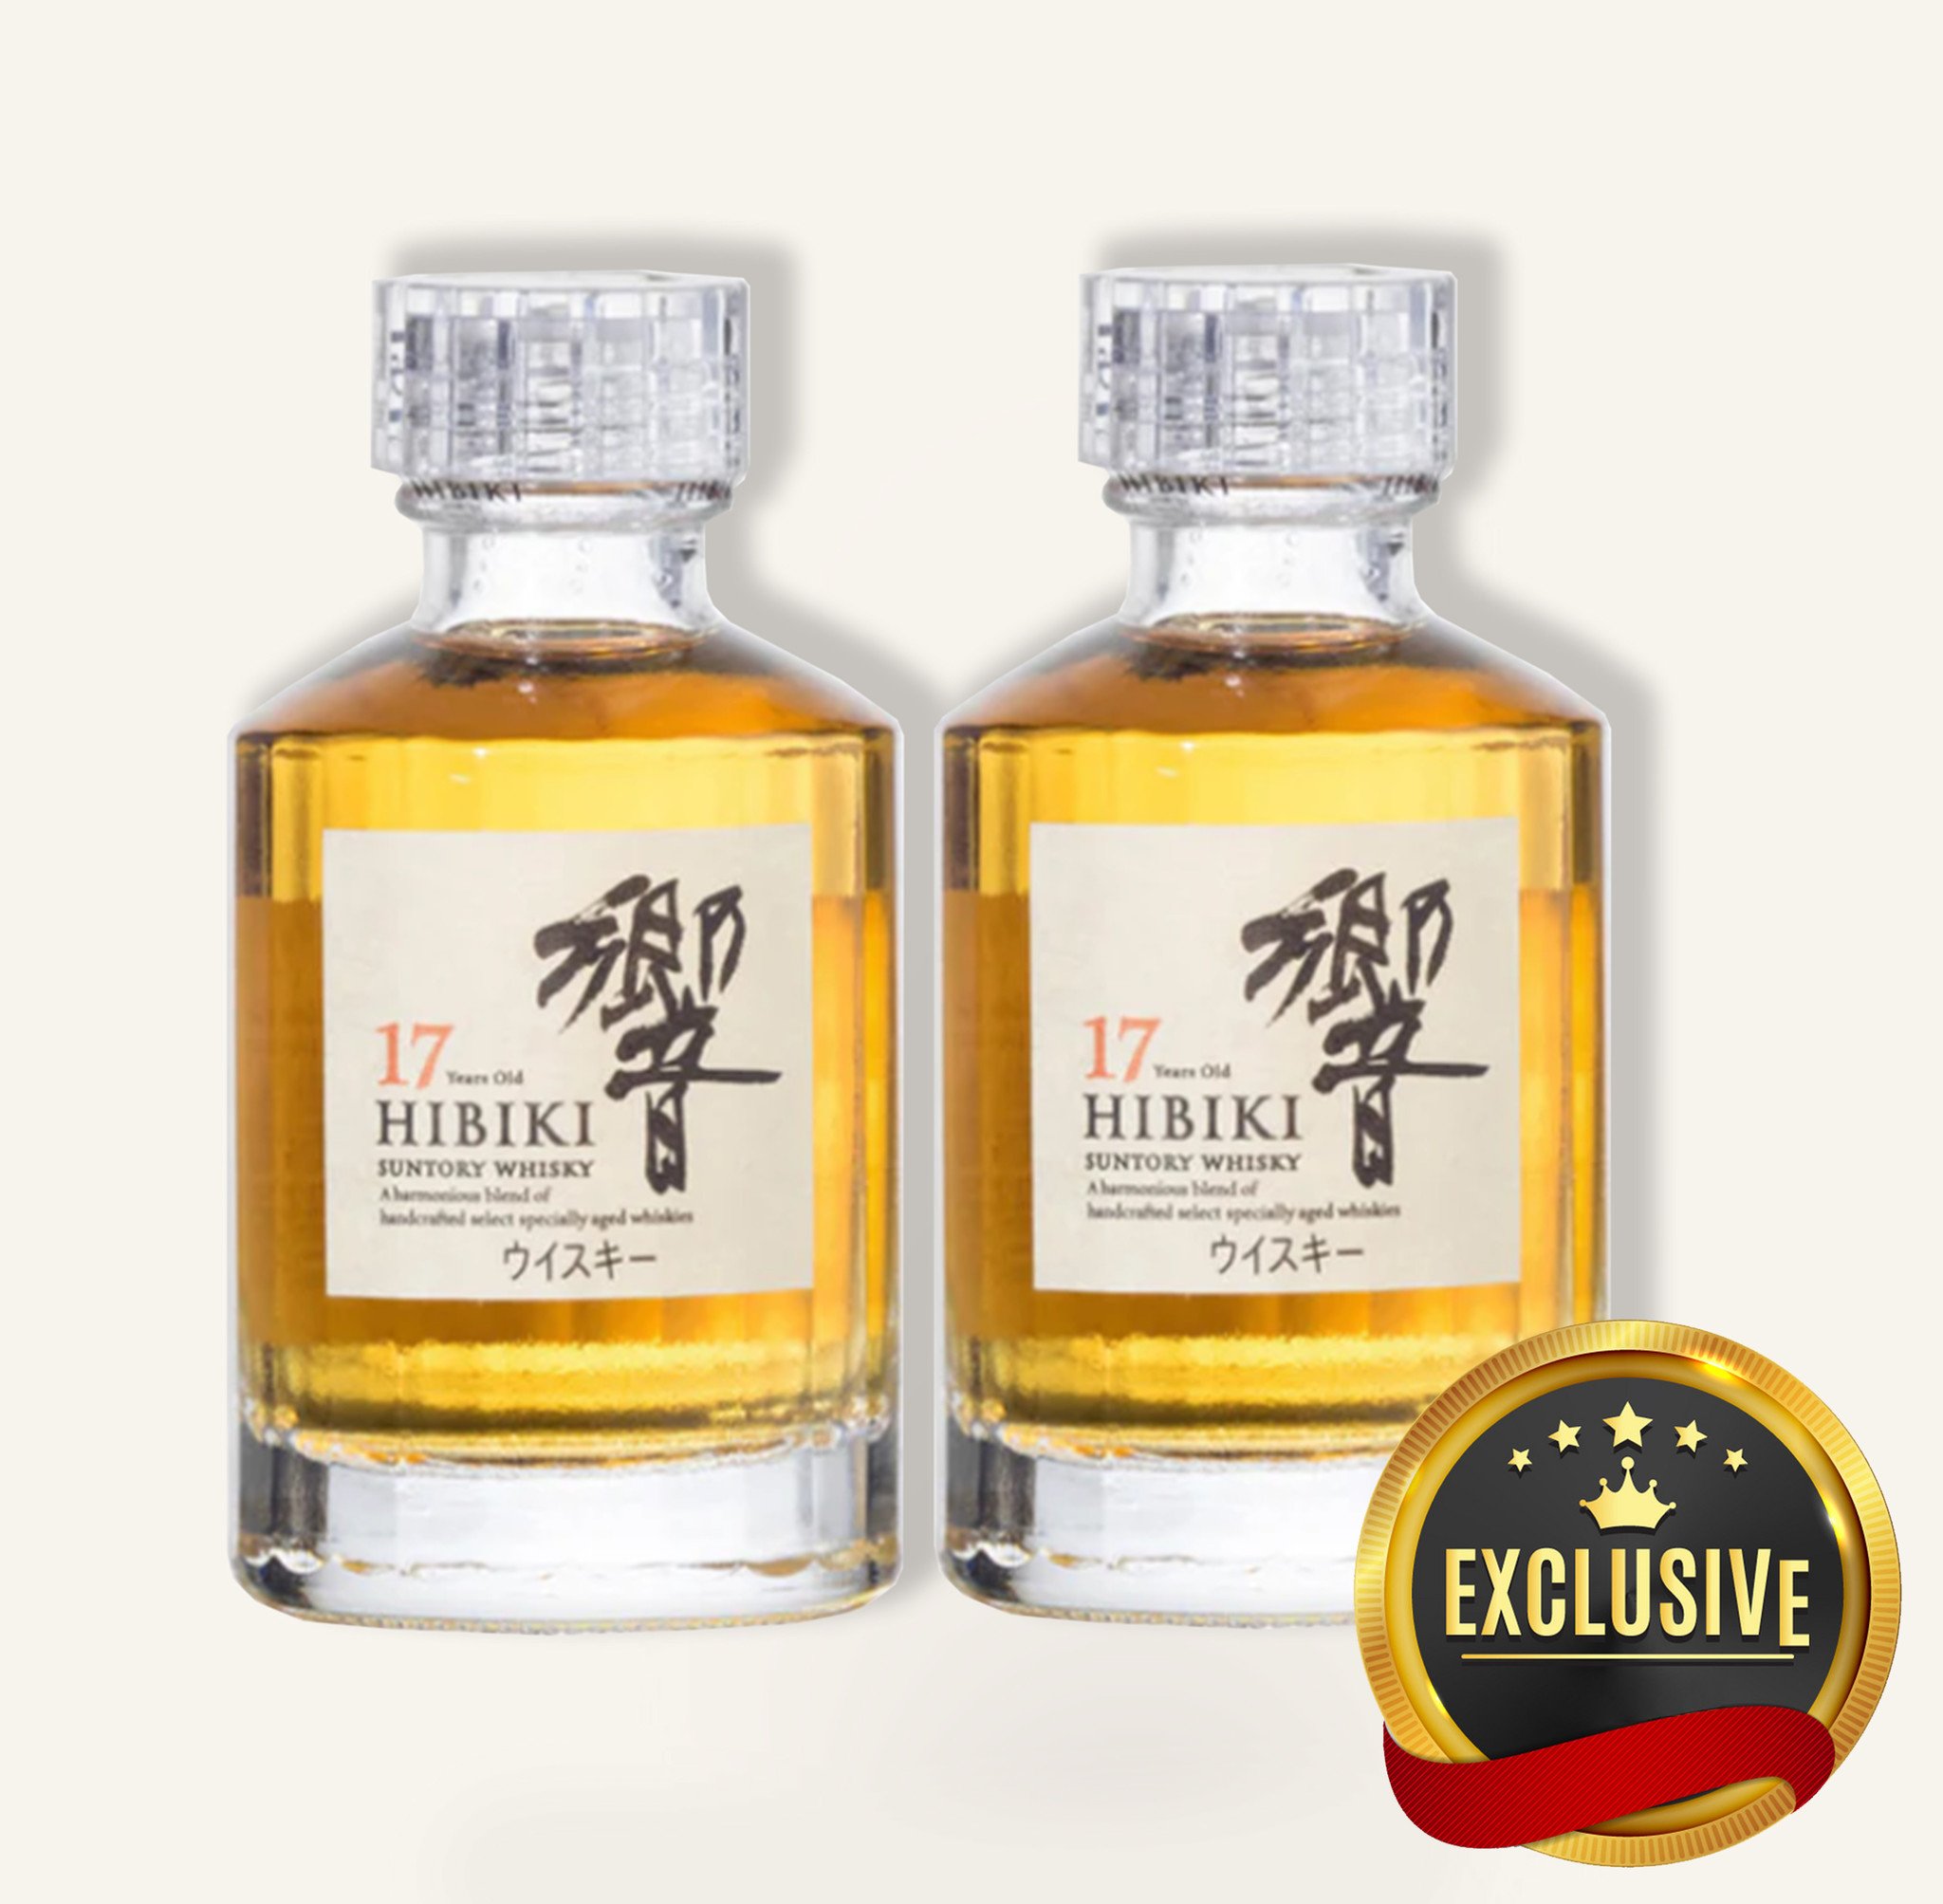 Hibiki 17 Yr Minis Blended Japanese Whisky 響 2 x 50ml $988